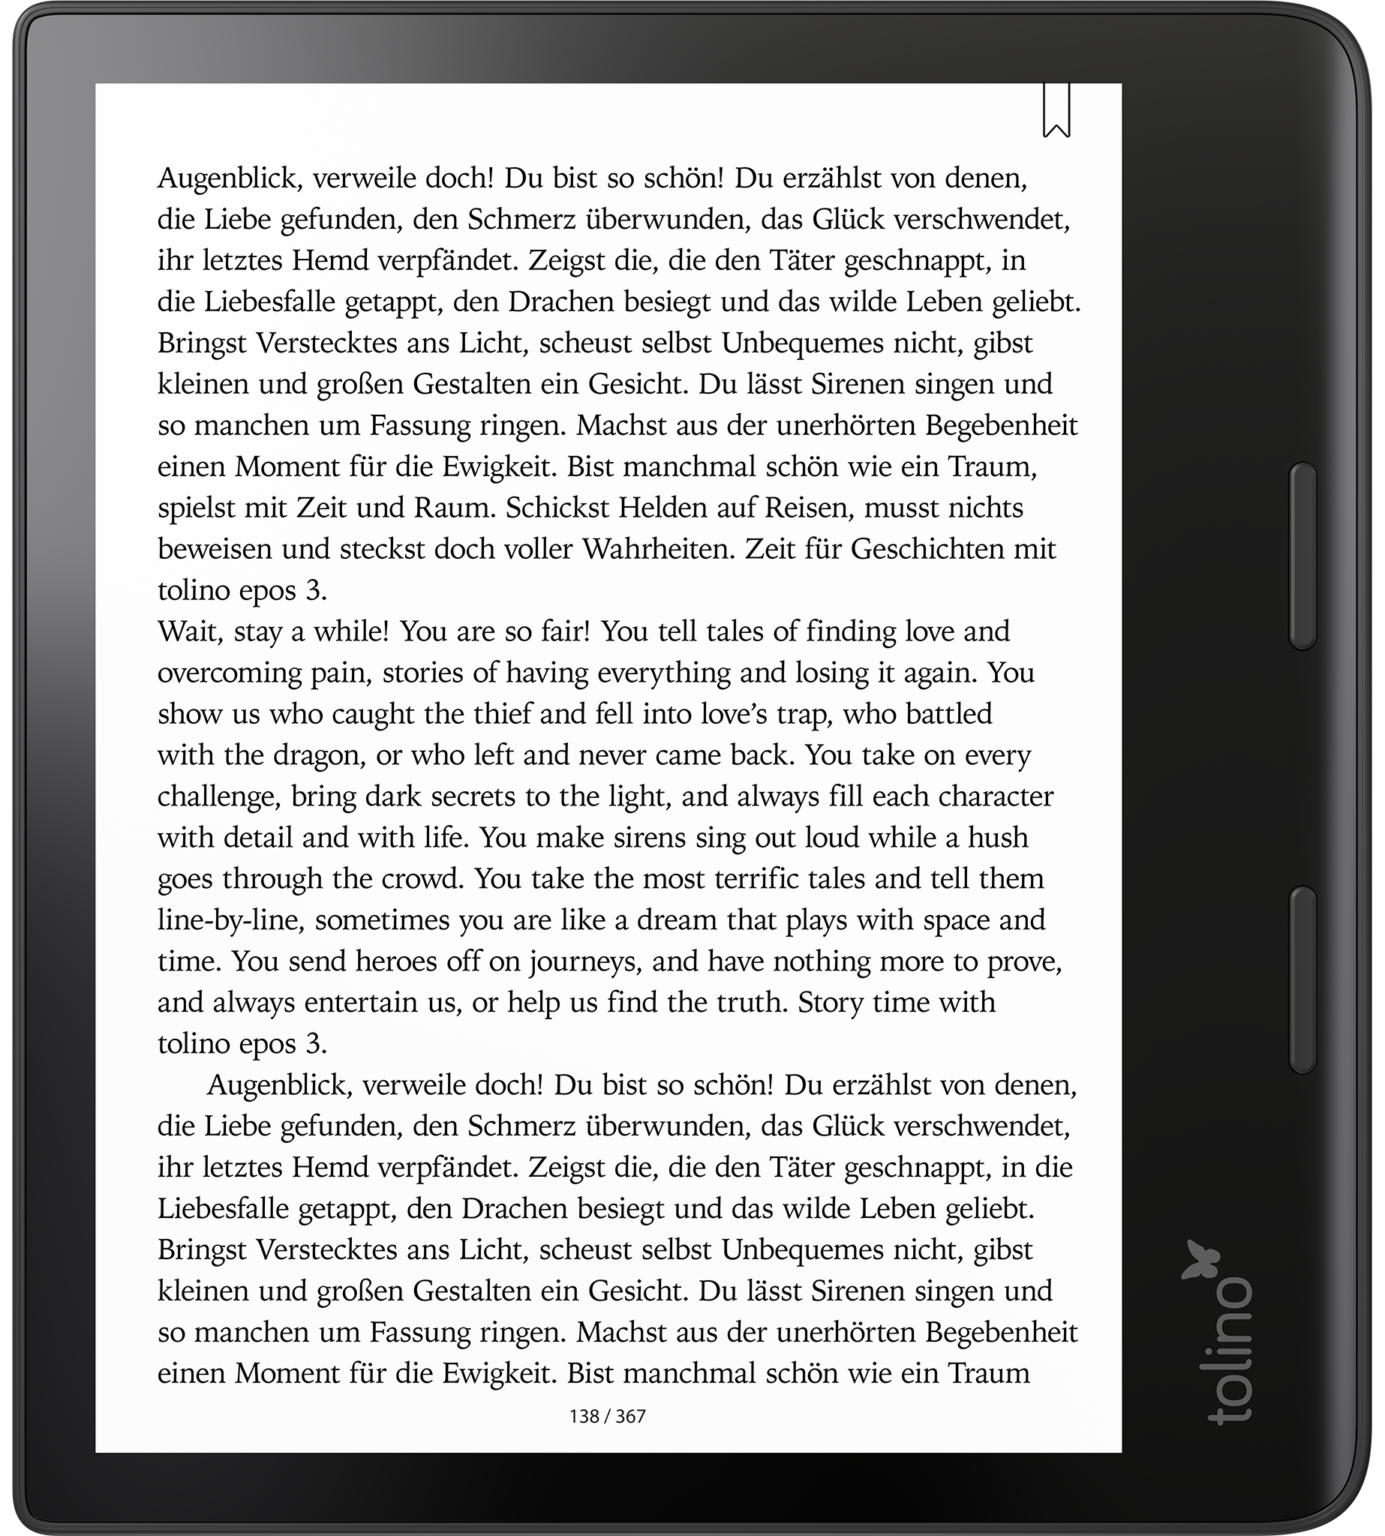 Tolino Epos - available now is Good e-reader 3 e-Reader